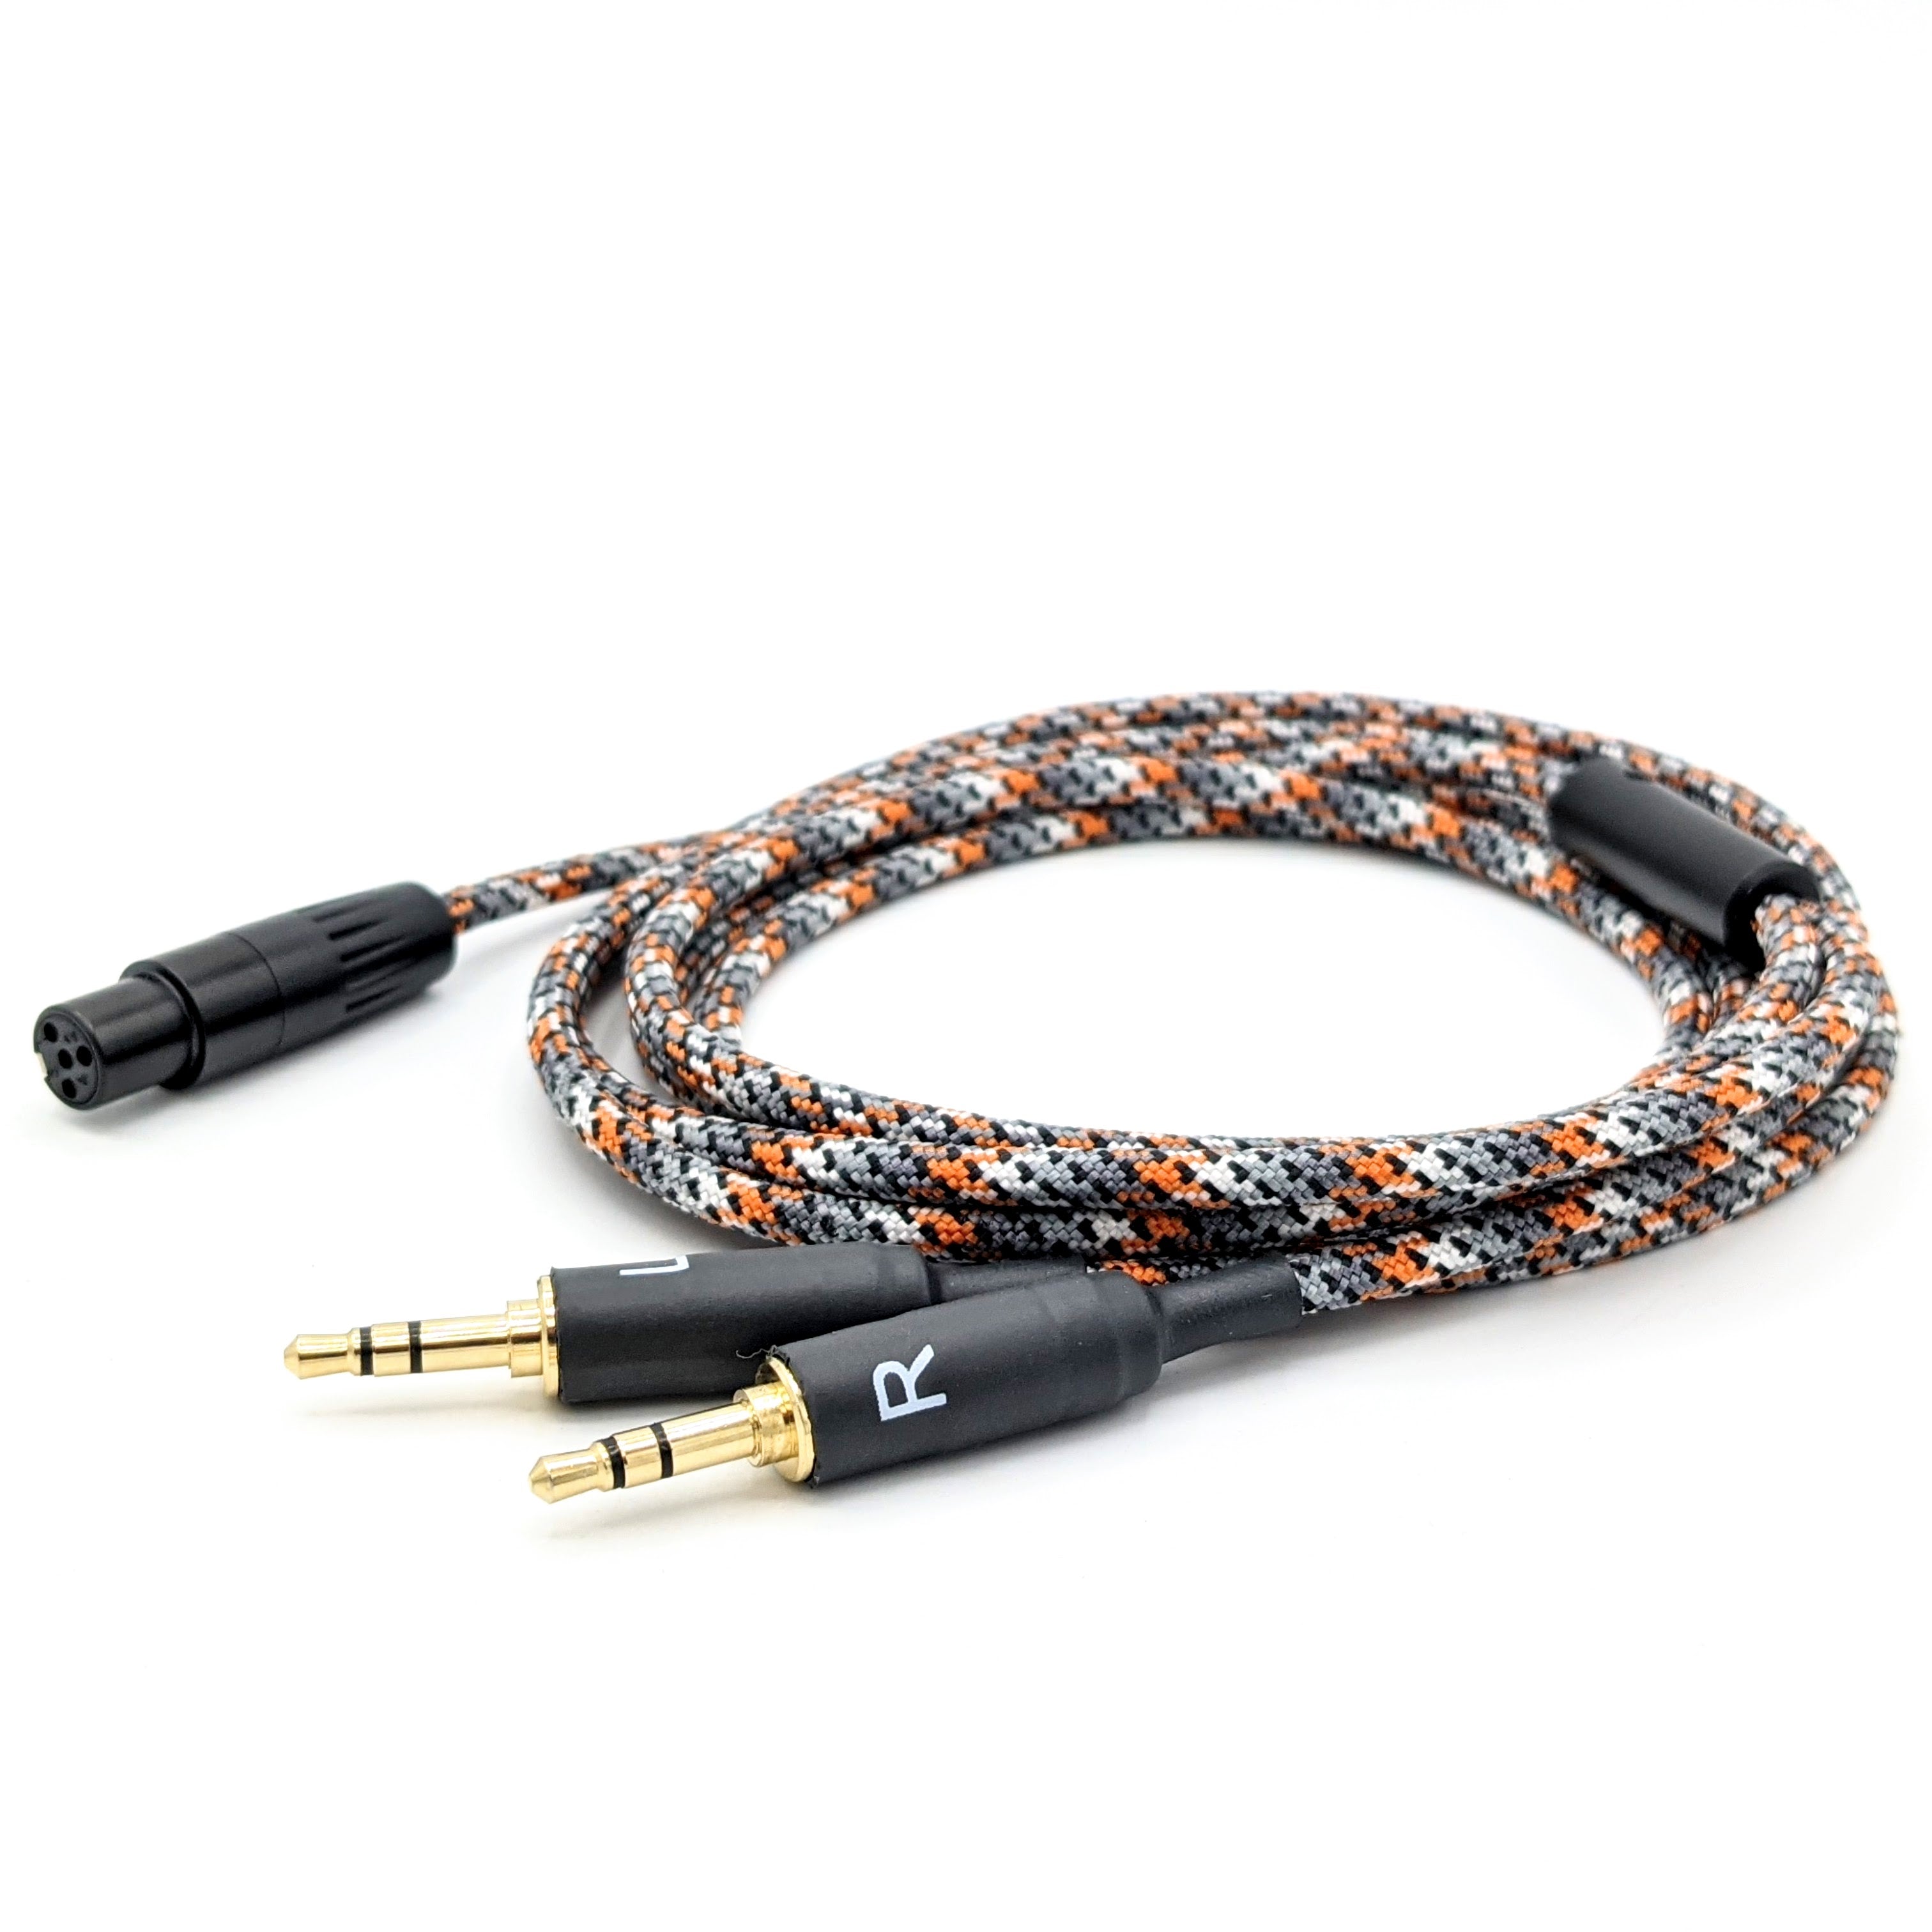 Custom Dual 3.5mm Balanced Headphone Cable for Focal headphones + more